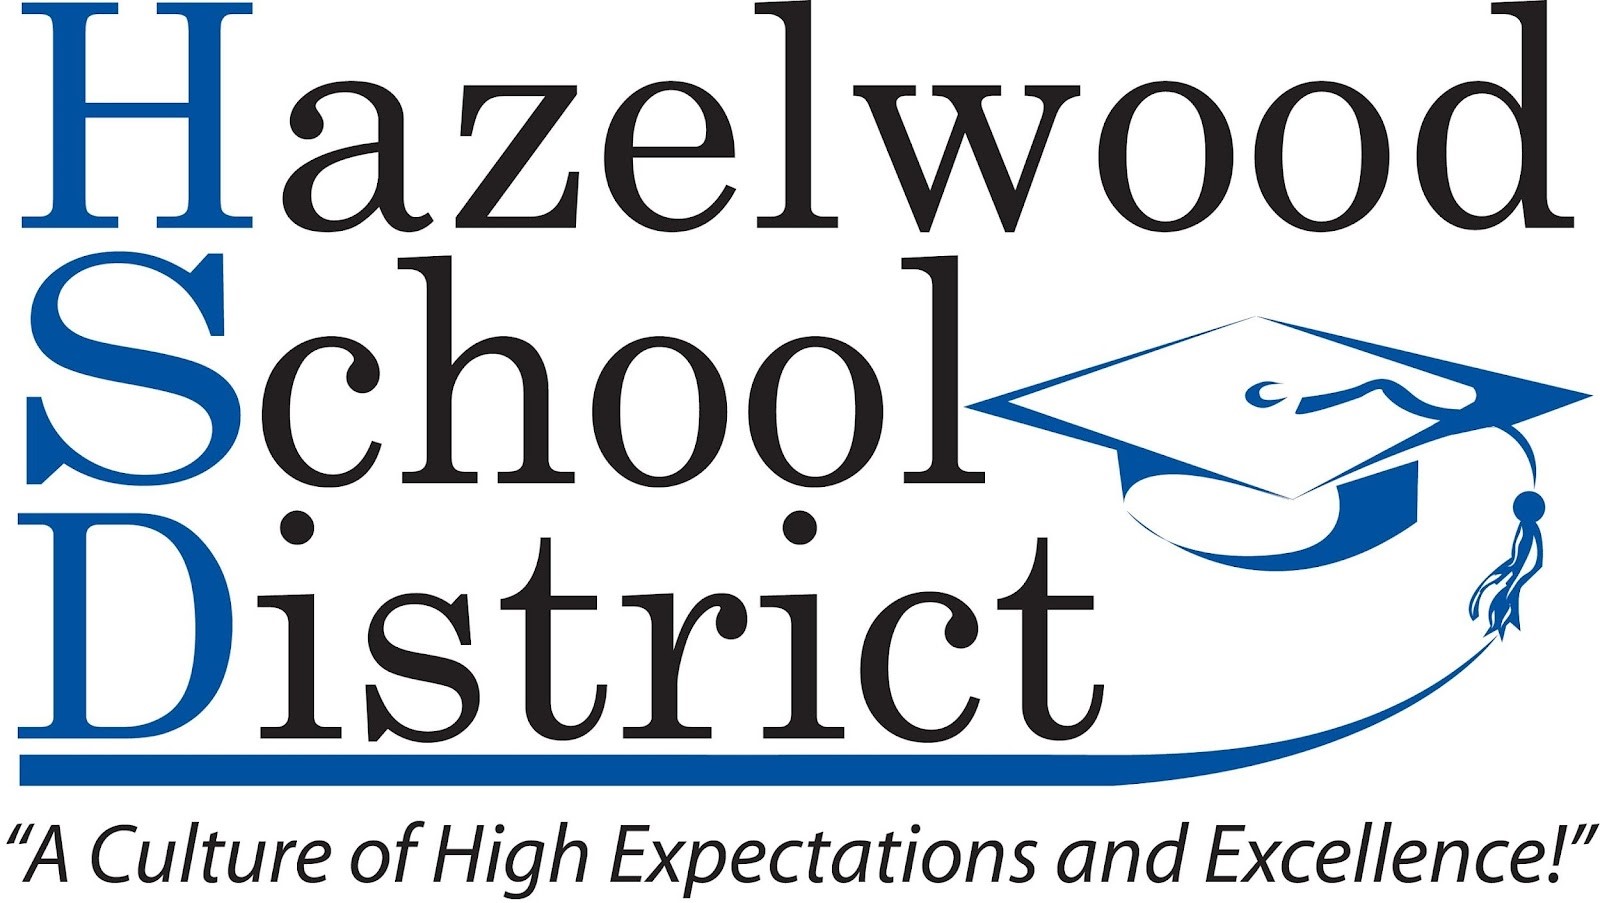 Hazelwood-school-district-logo